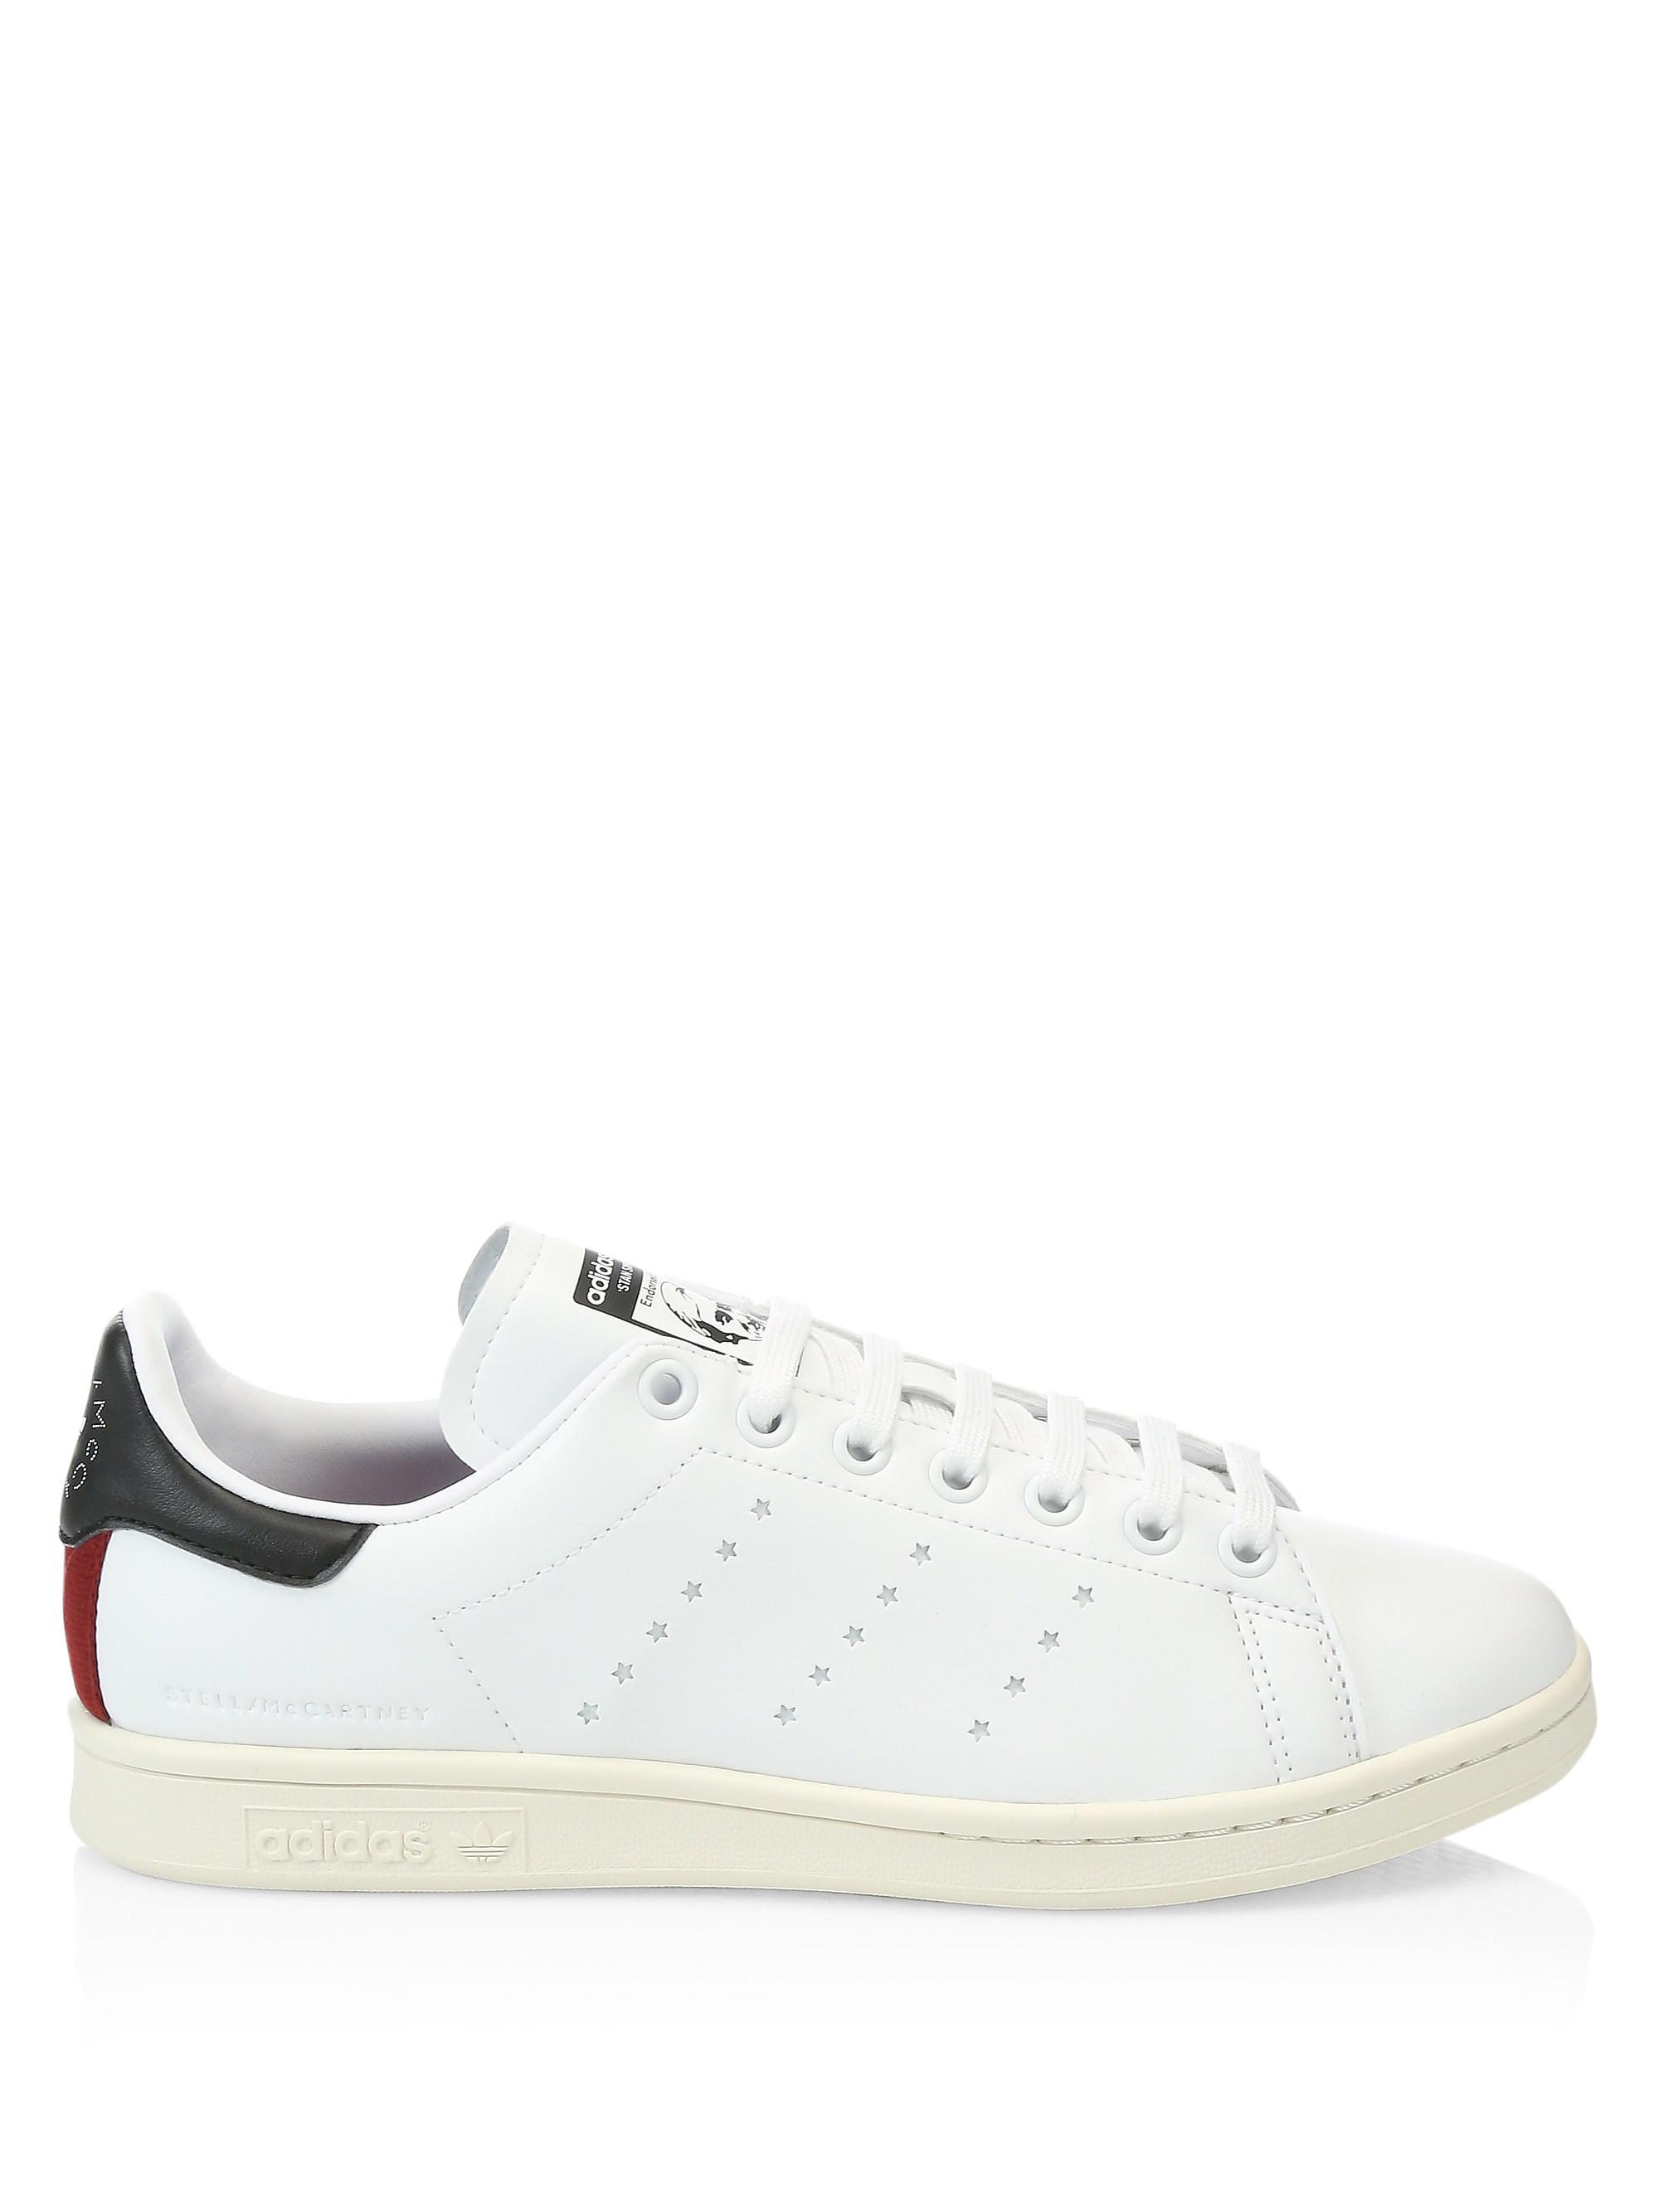 Stella Stan Smith Sneakers in White - Stella Mc Cartney